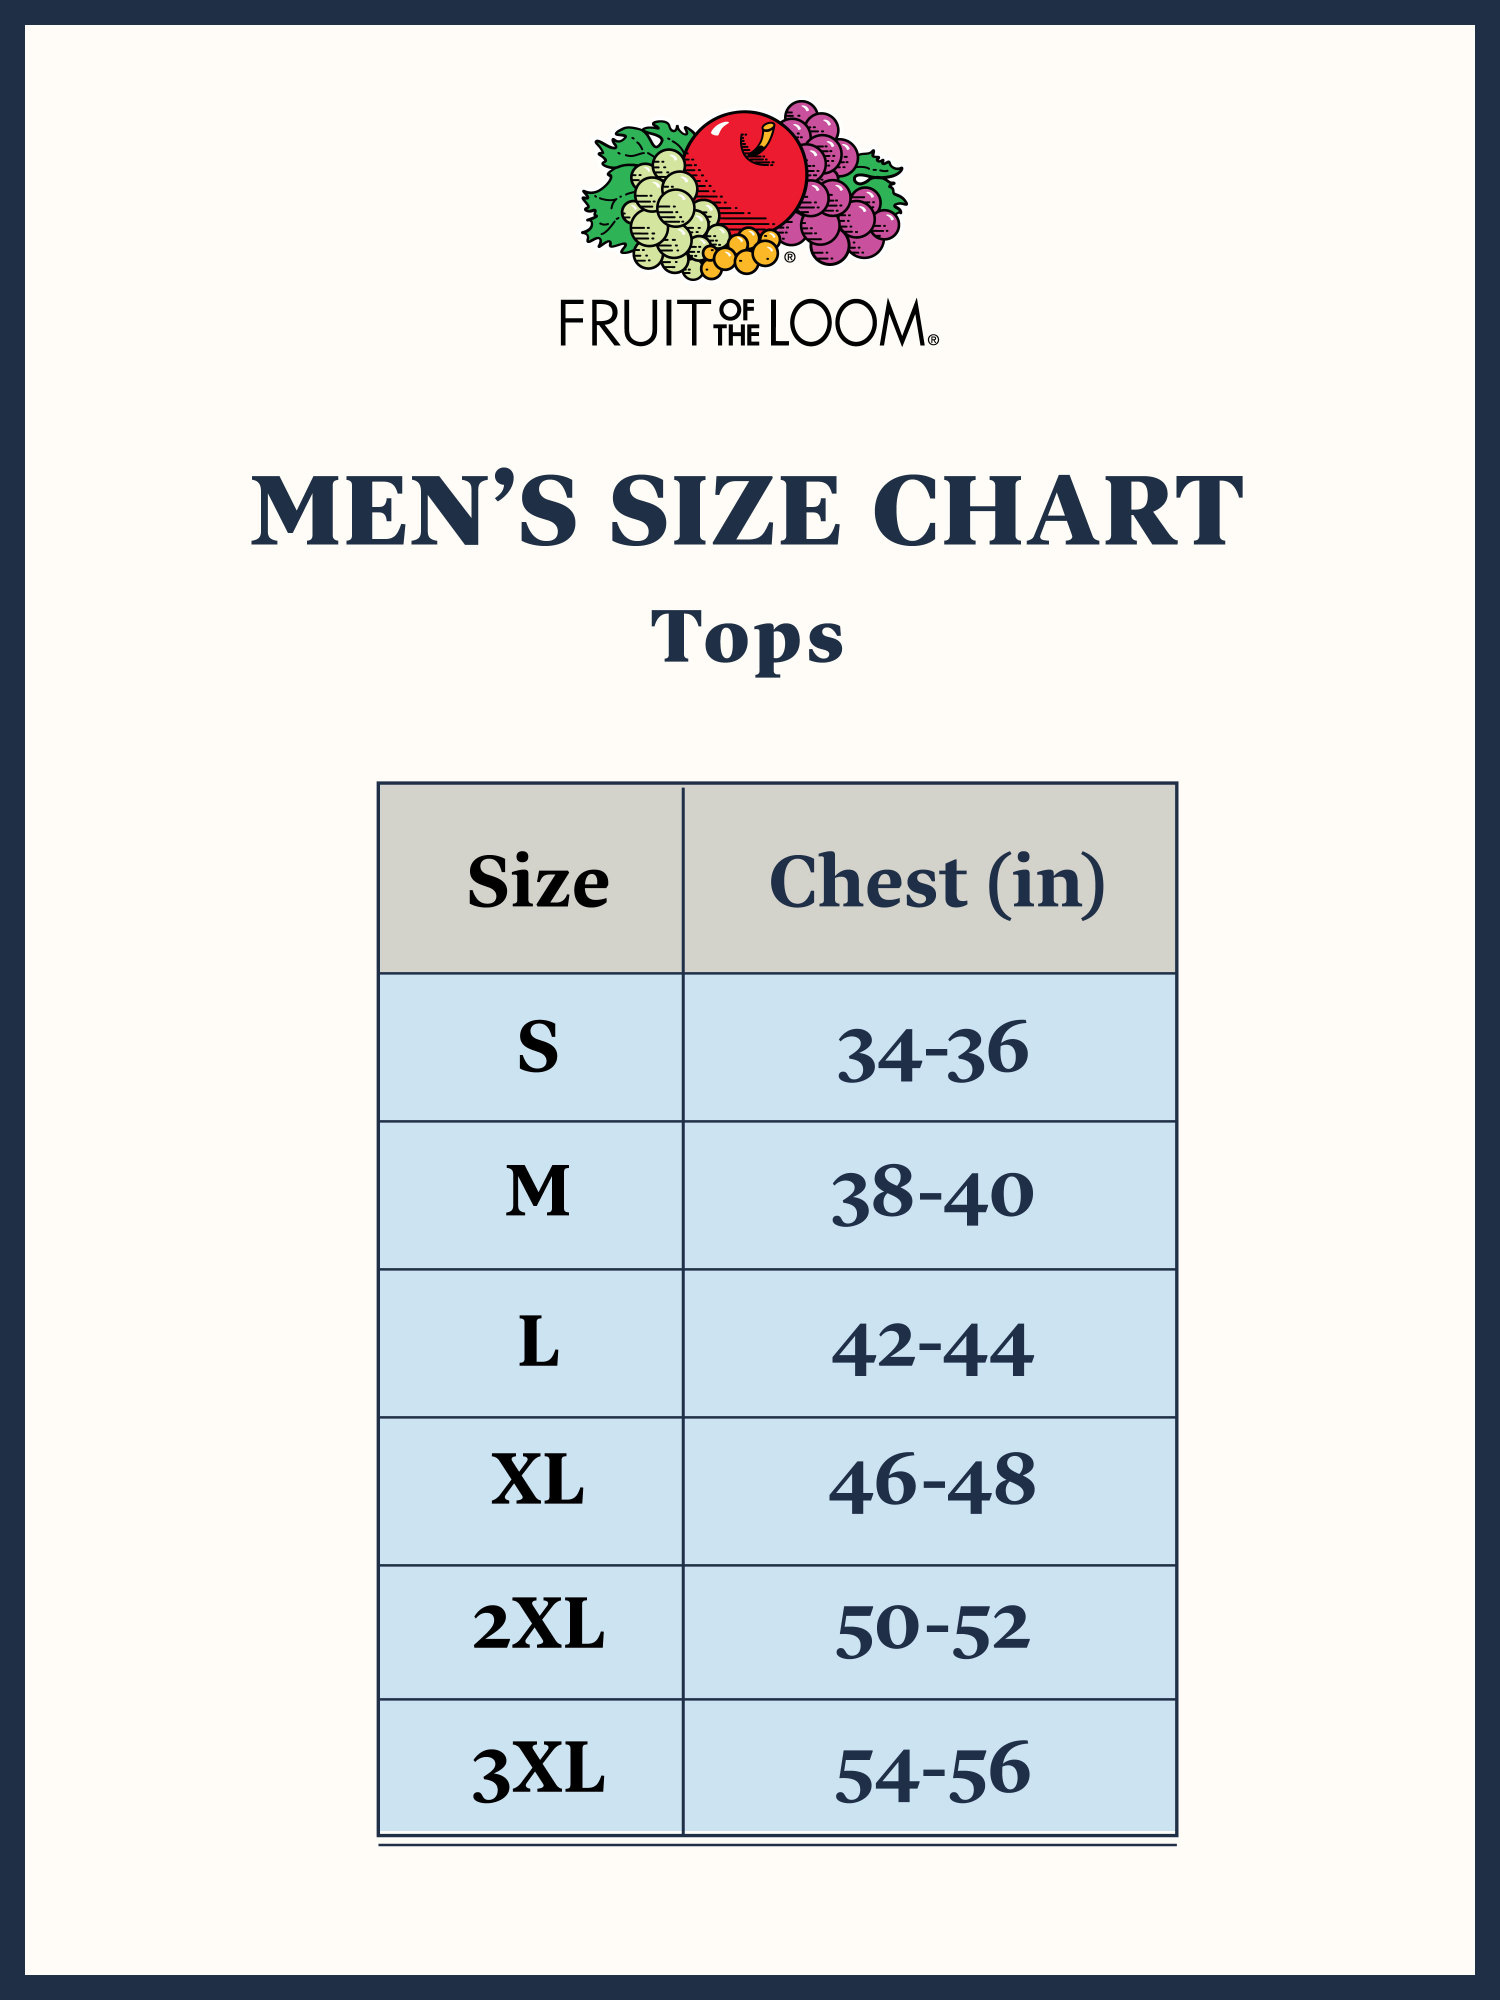 Fruit of the Loom Men's White A-Shirts, 6+6 Bonus Pack - image 4 of 5